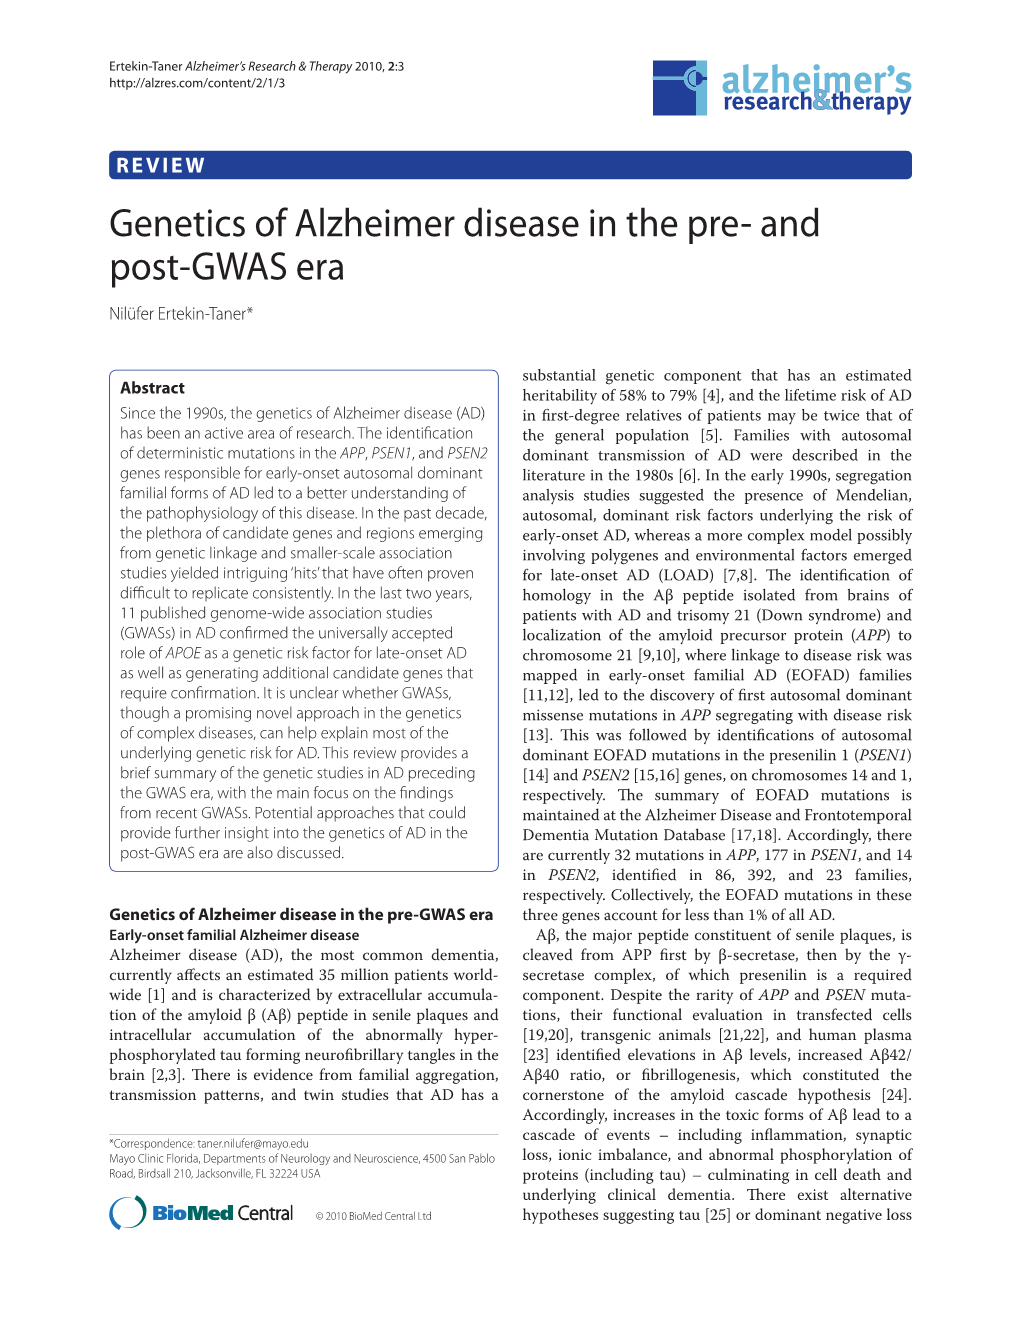 VIEW Genetics of Alzheimer Disease in the Pre- and Post-GWAS Era Nilüfer Ertekin-Taner*